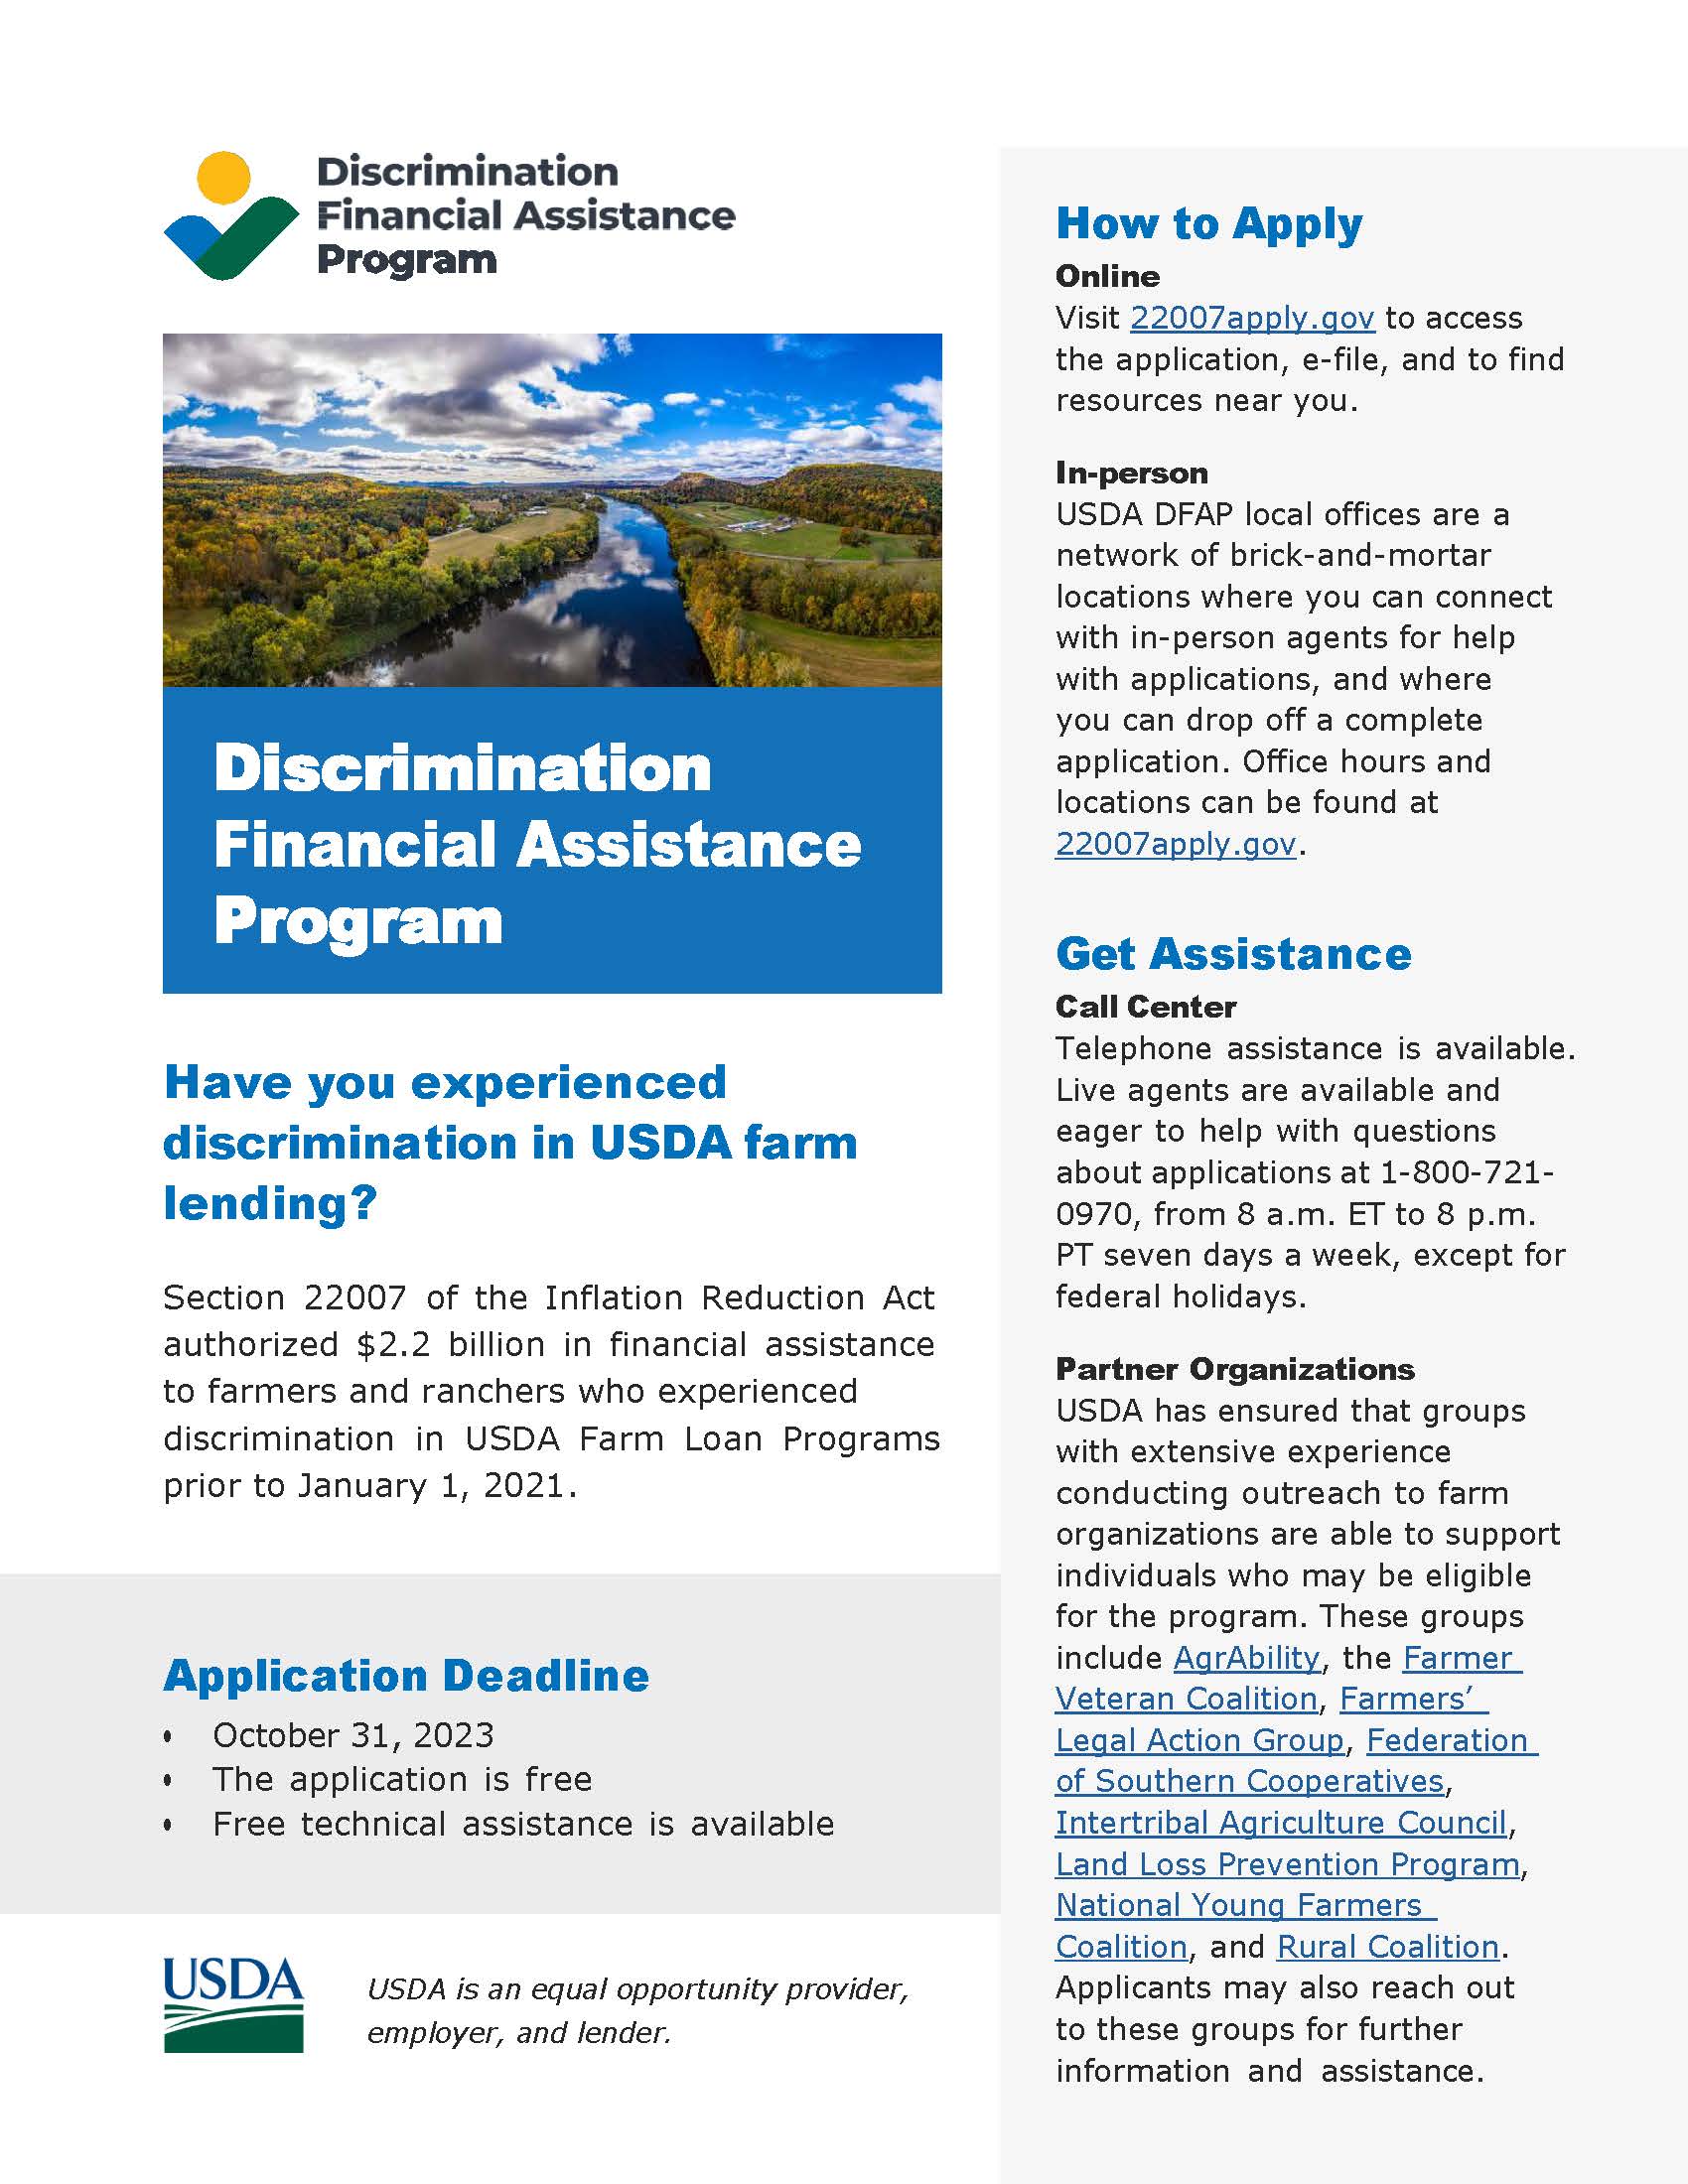 Discrimination Financial Assistance Program